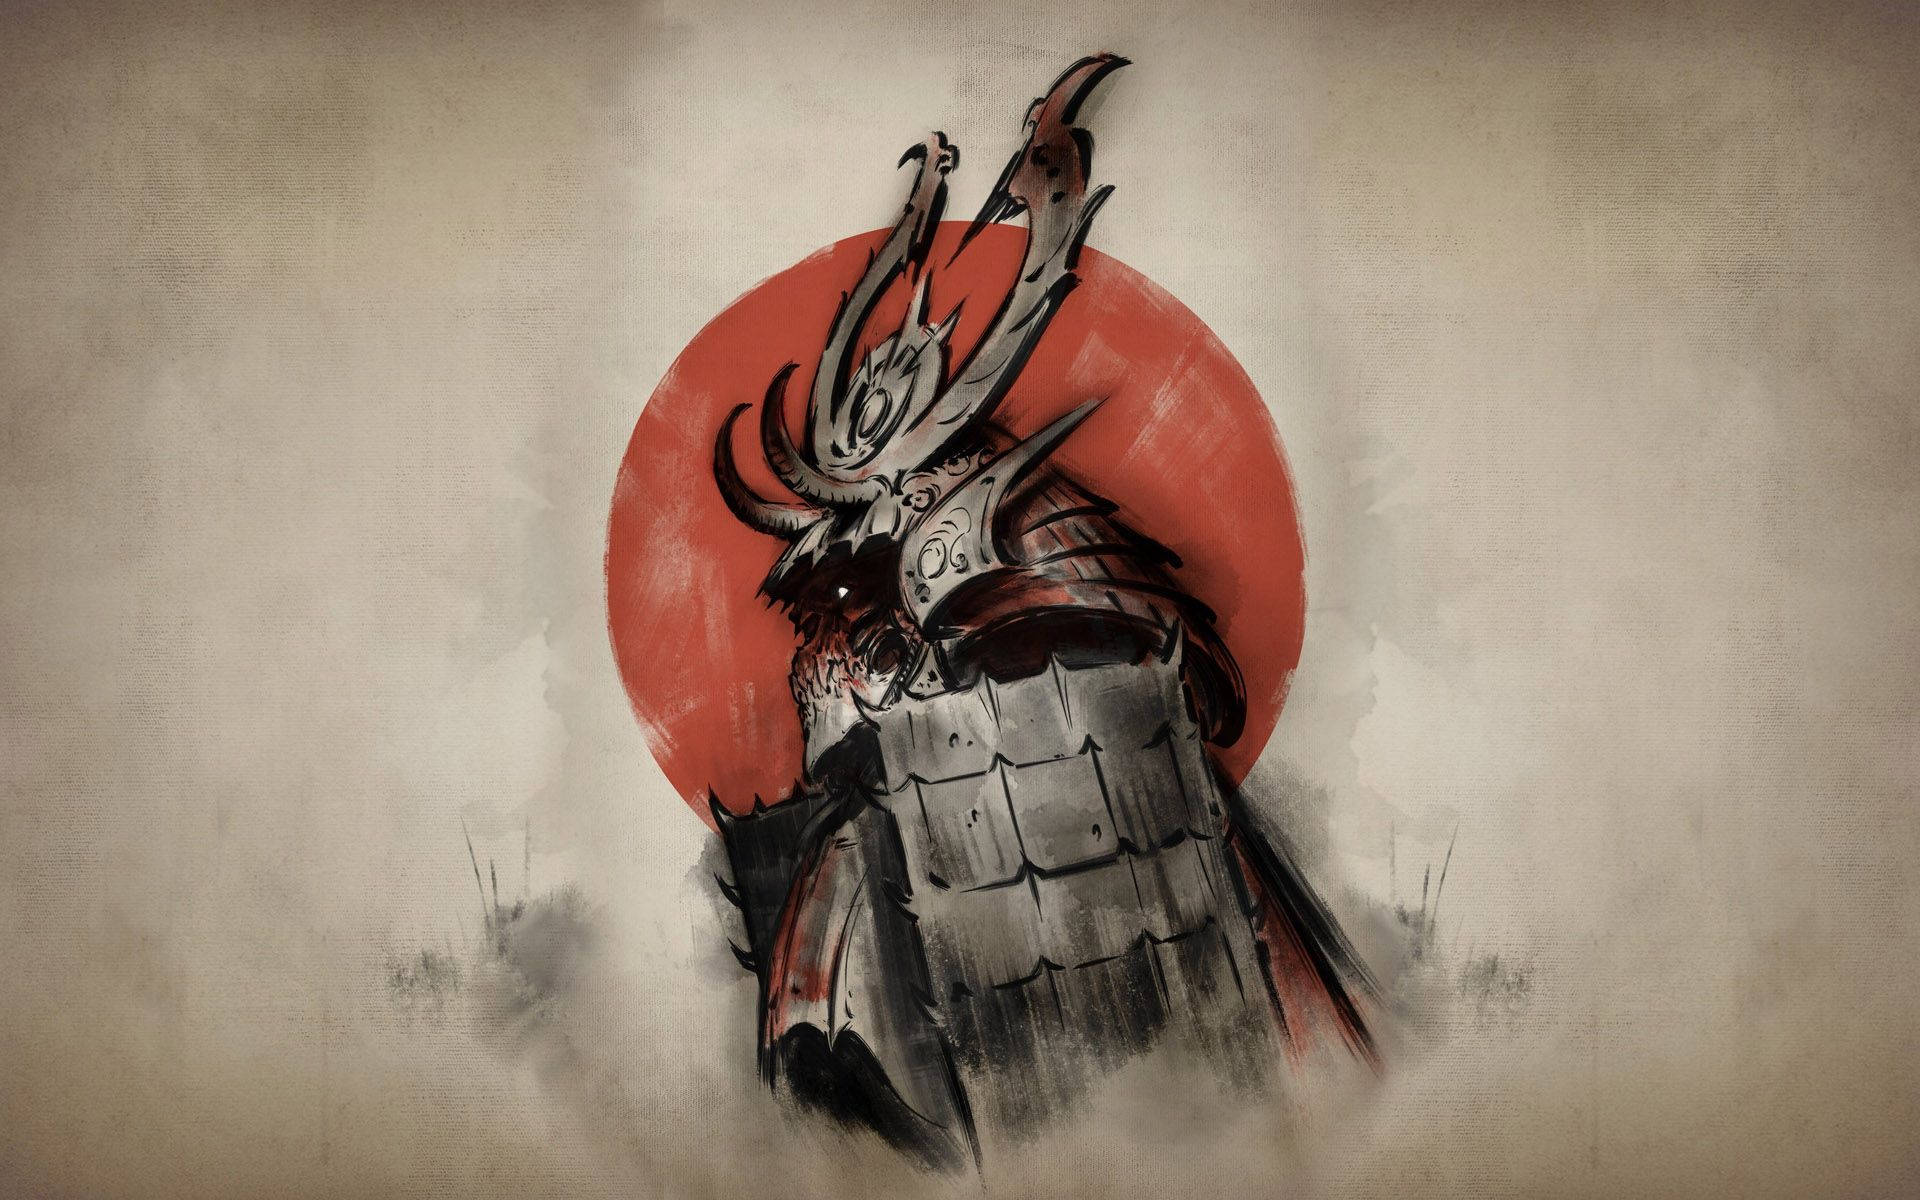 This vibrant painting displays a classic Samurai fight scene Wallpaper